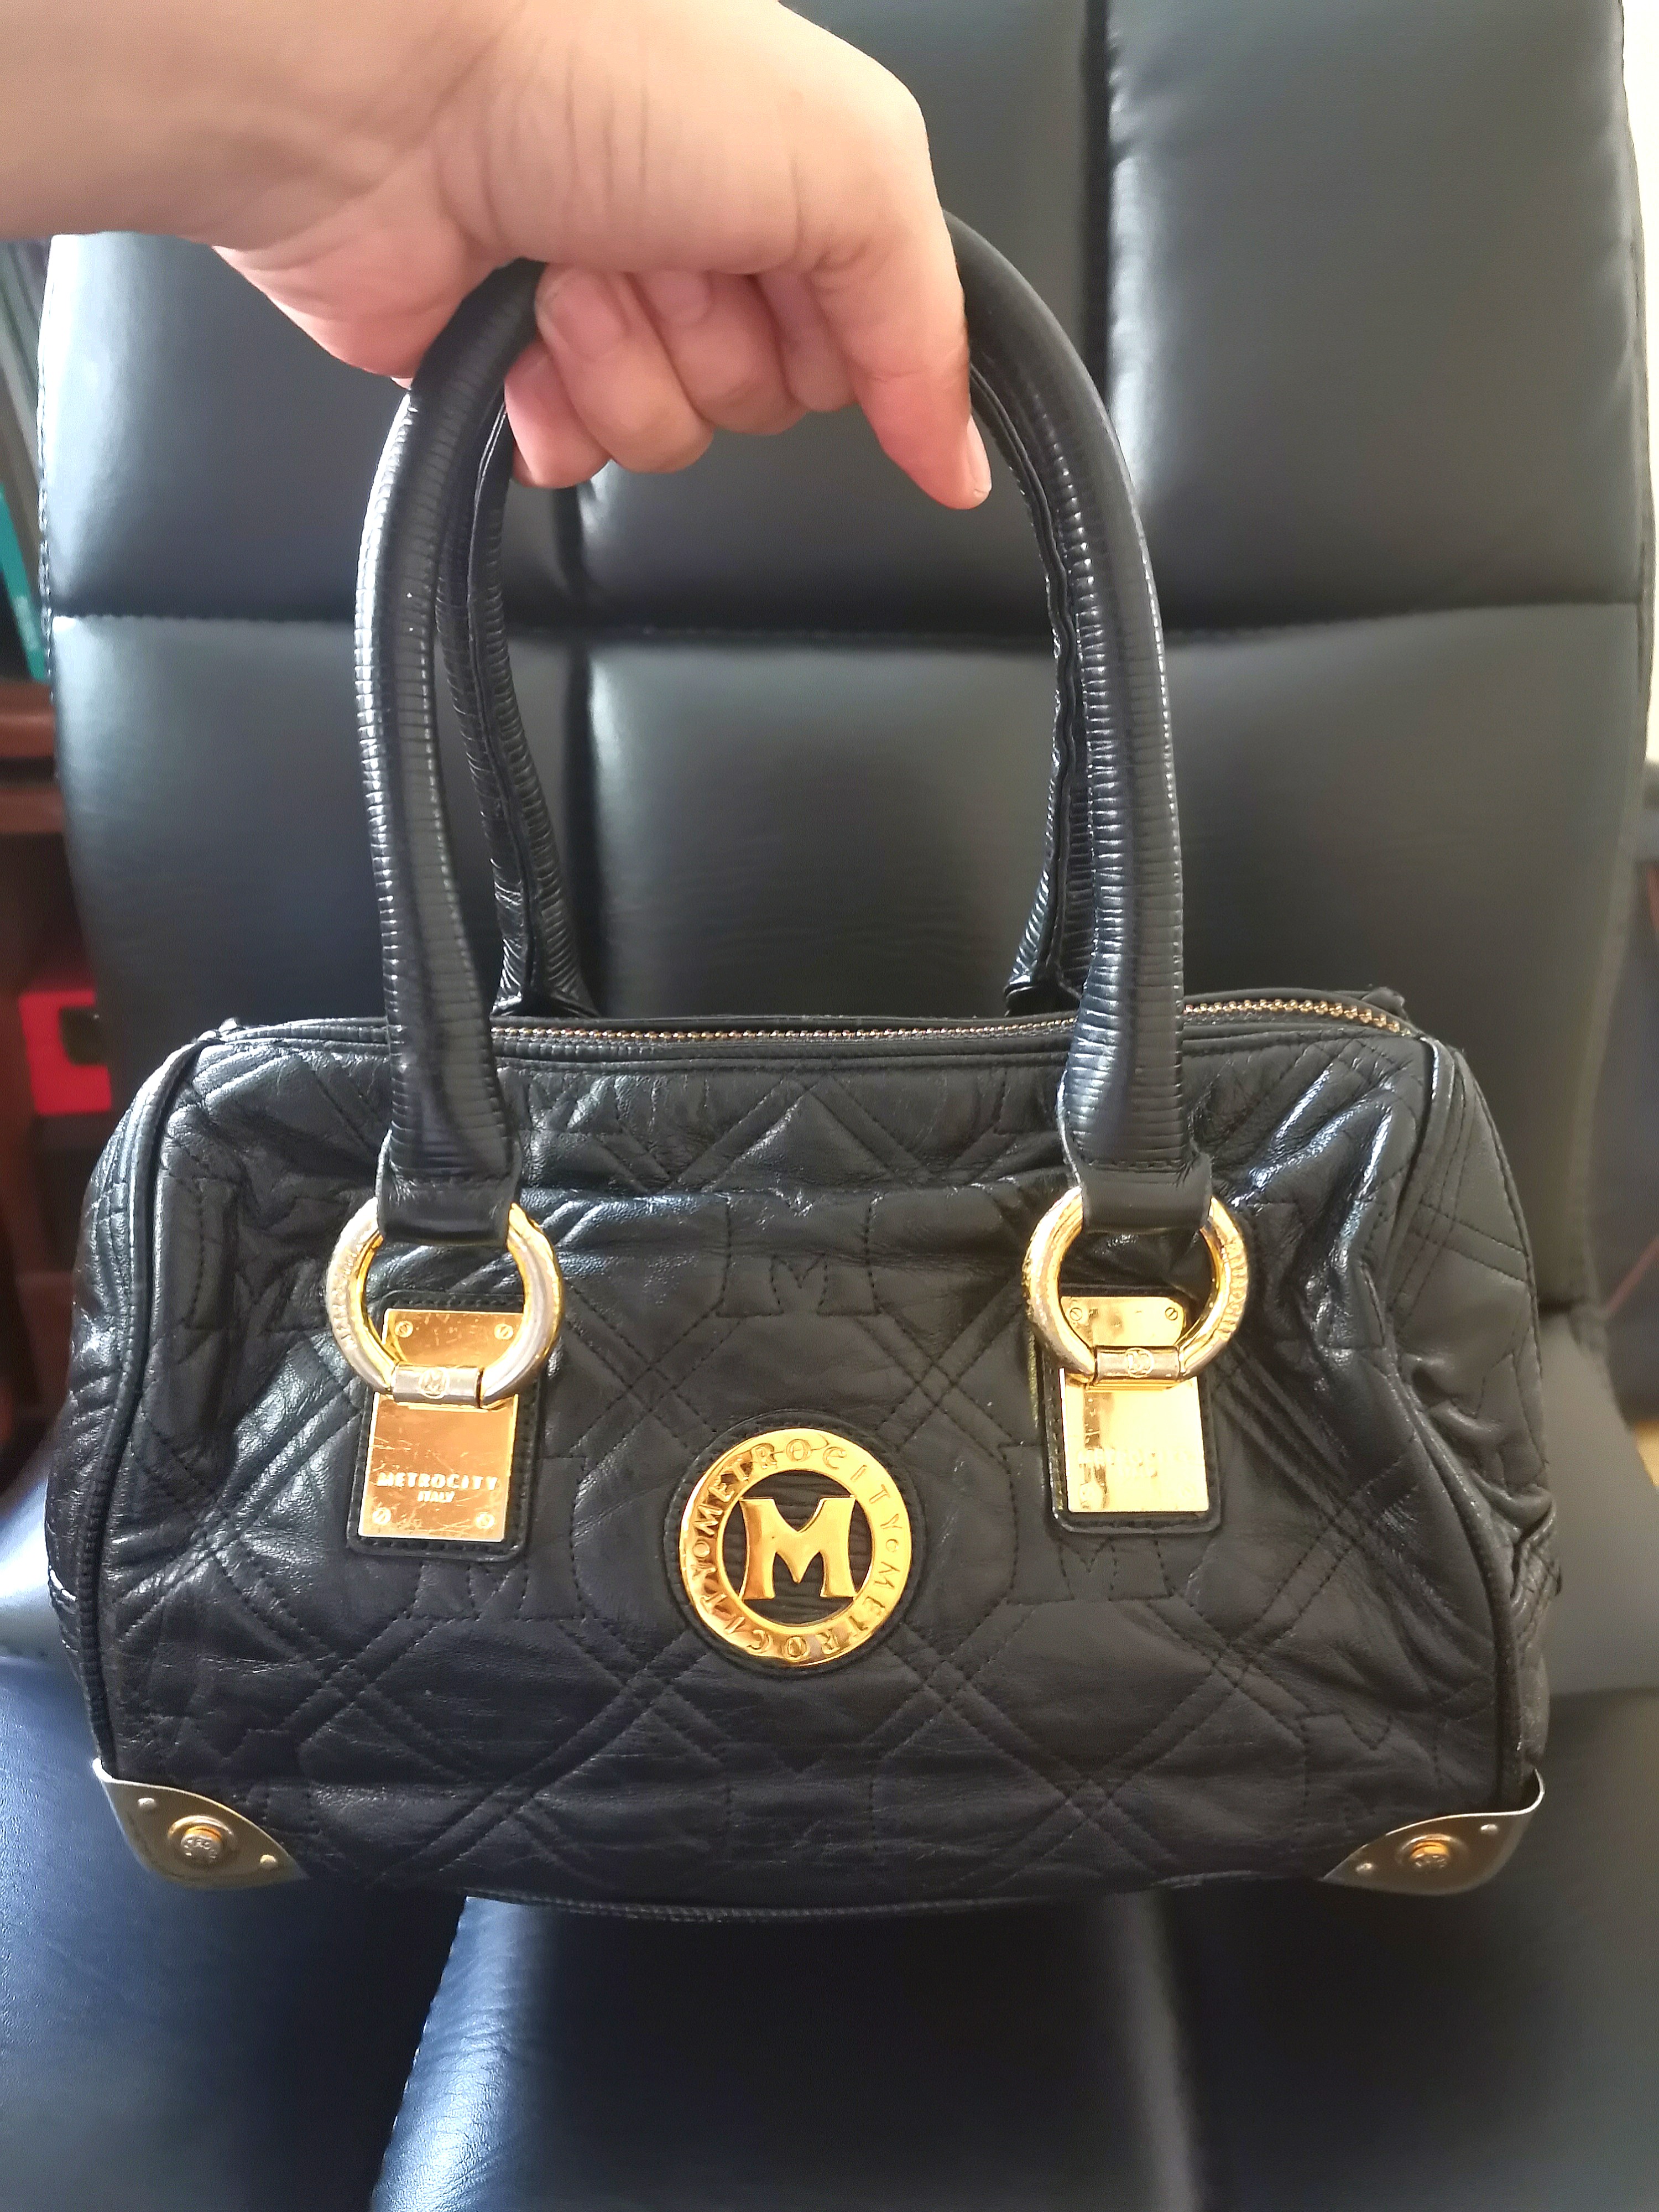 Authentic METRO CITY Black Leather Handbag Made In ITALY